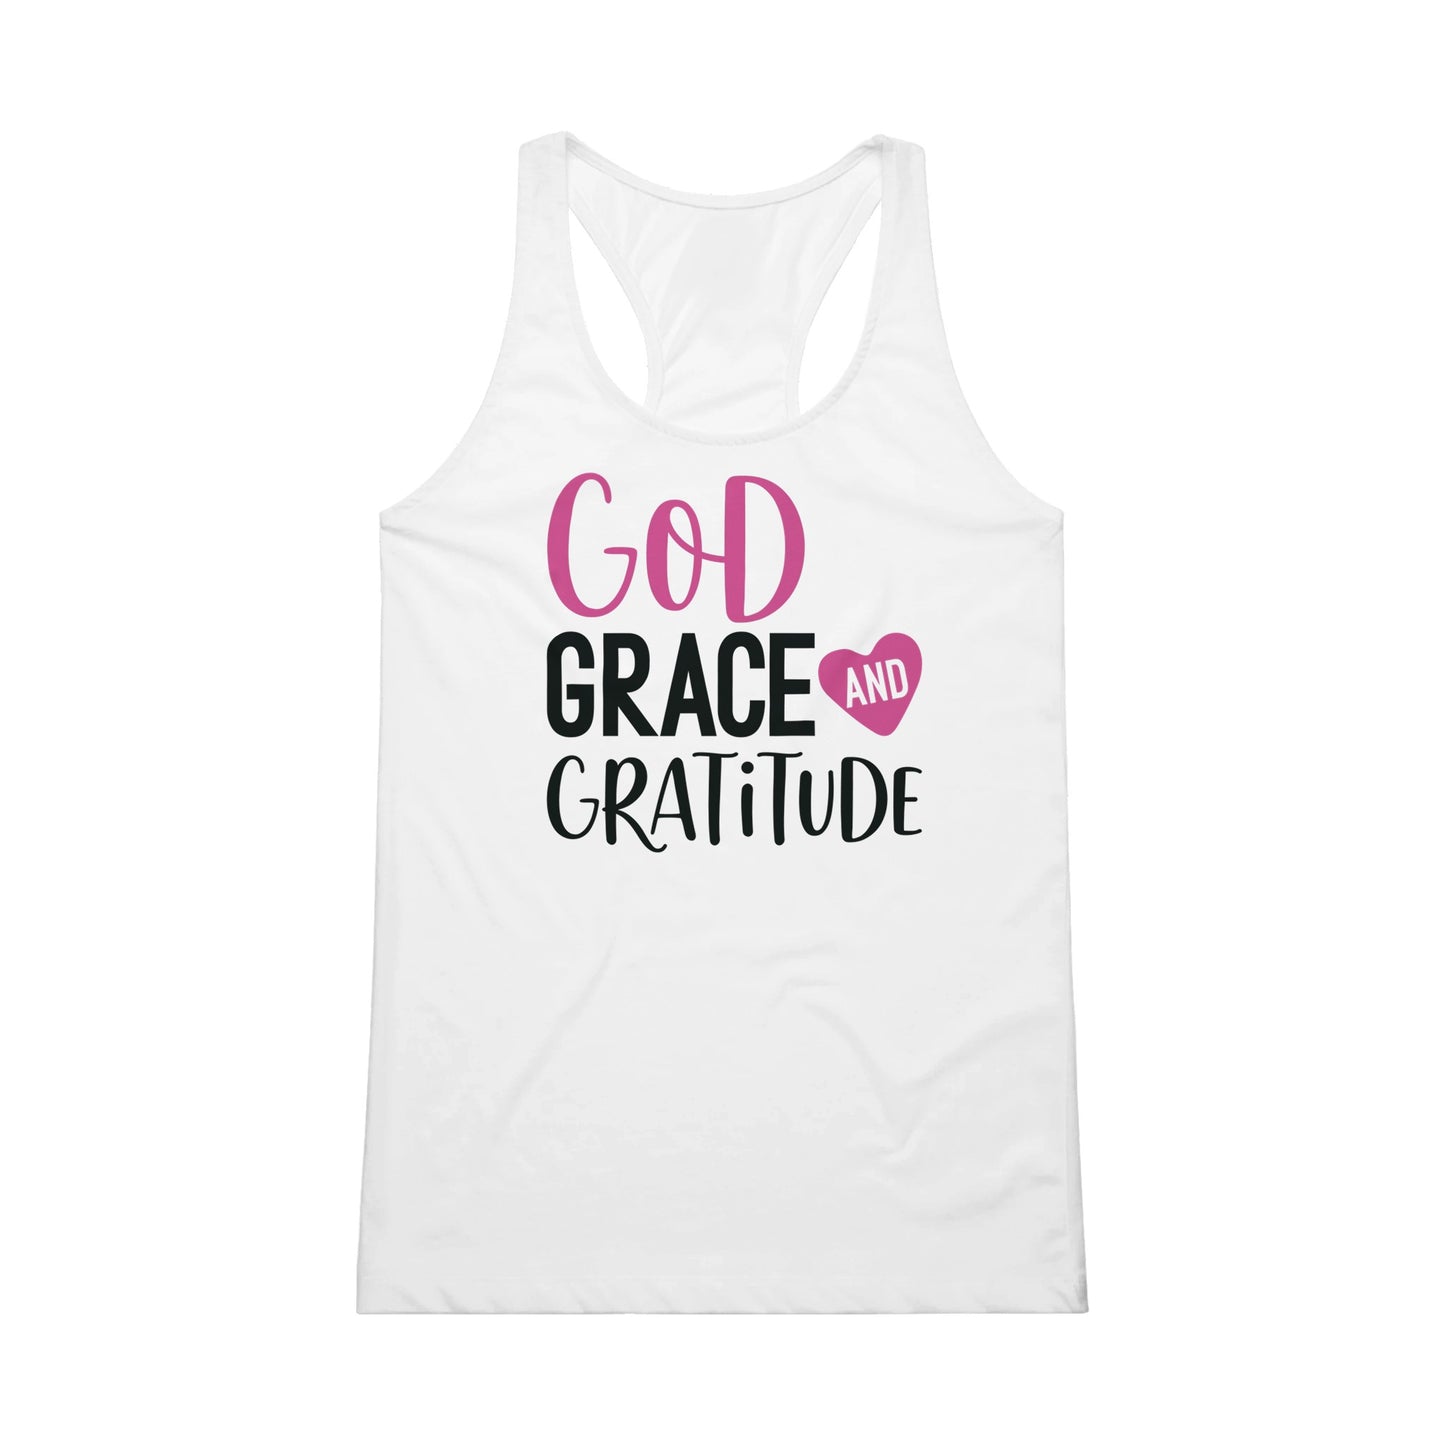 "God, Grace, and Gratitude" Performance Women's Christian Tank Top